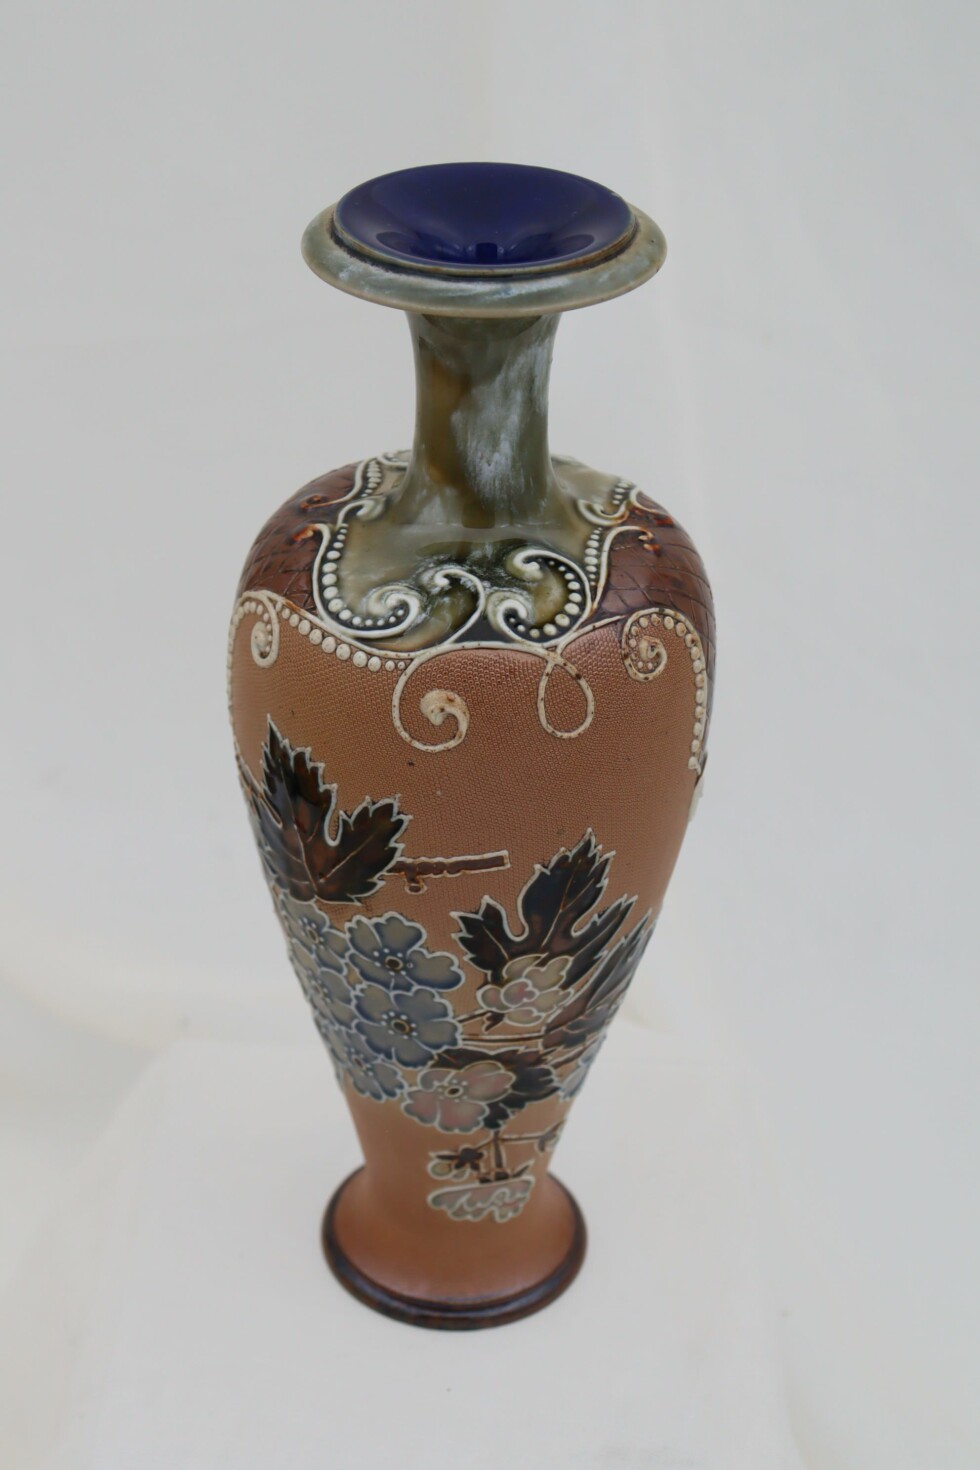 Royal Doulton Chine Ware vase